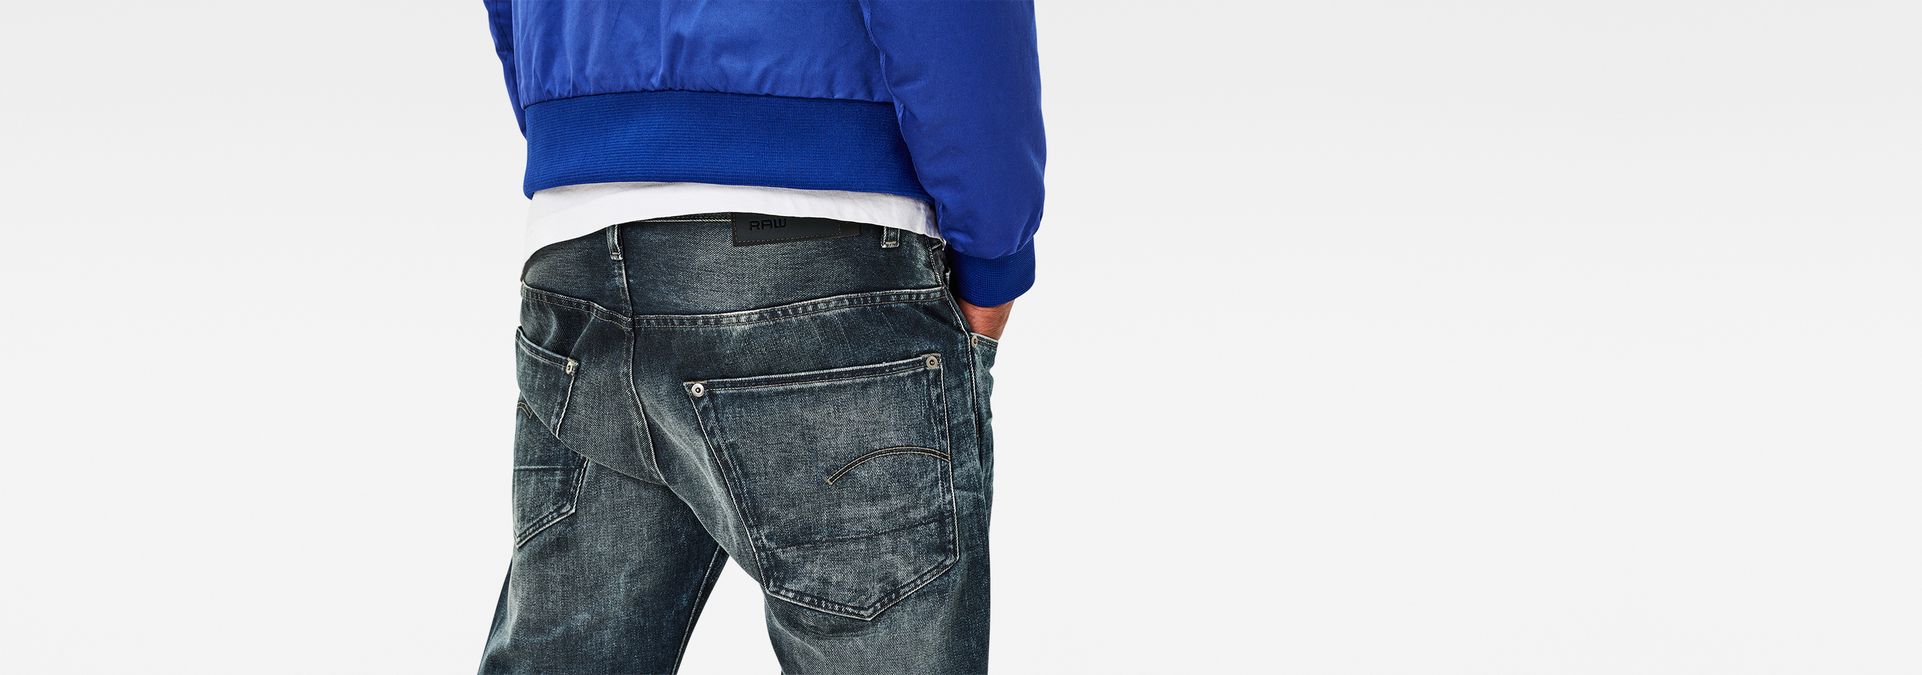 g star new radar loose mens jeans